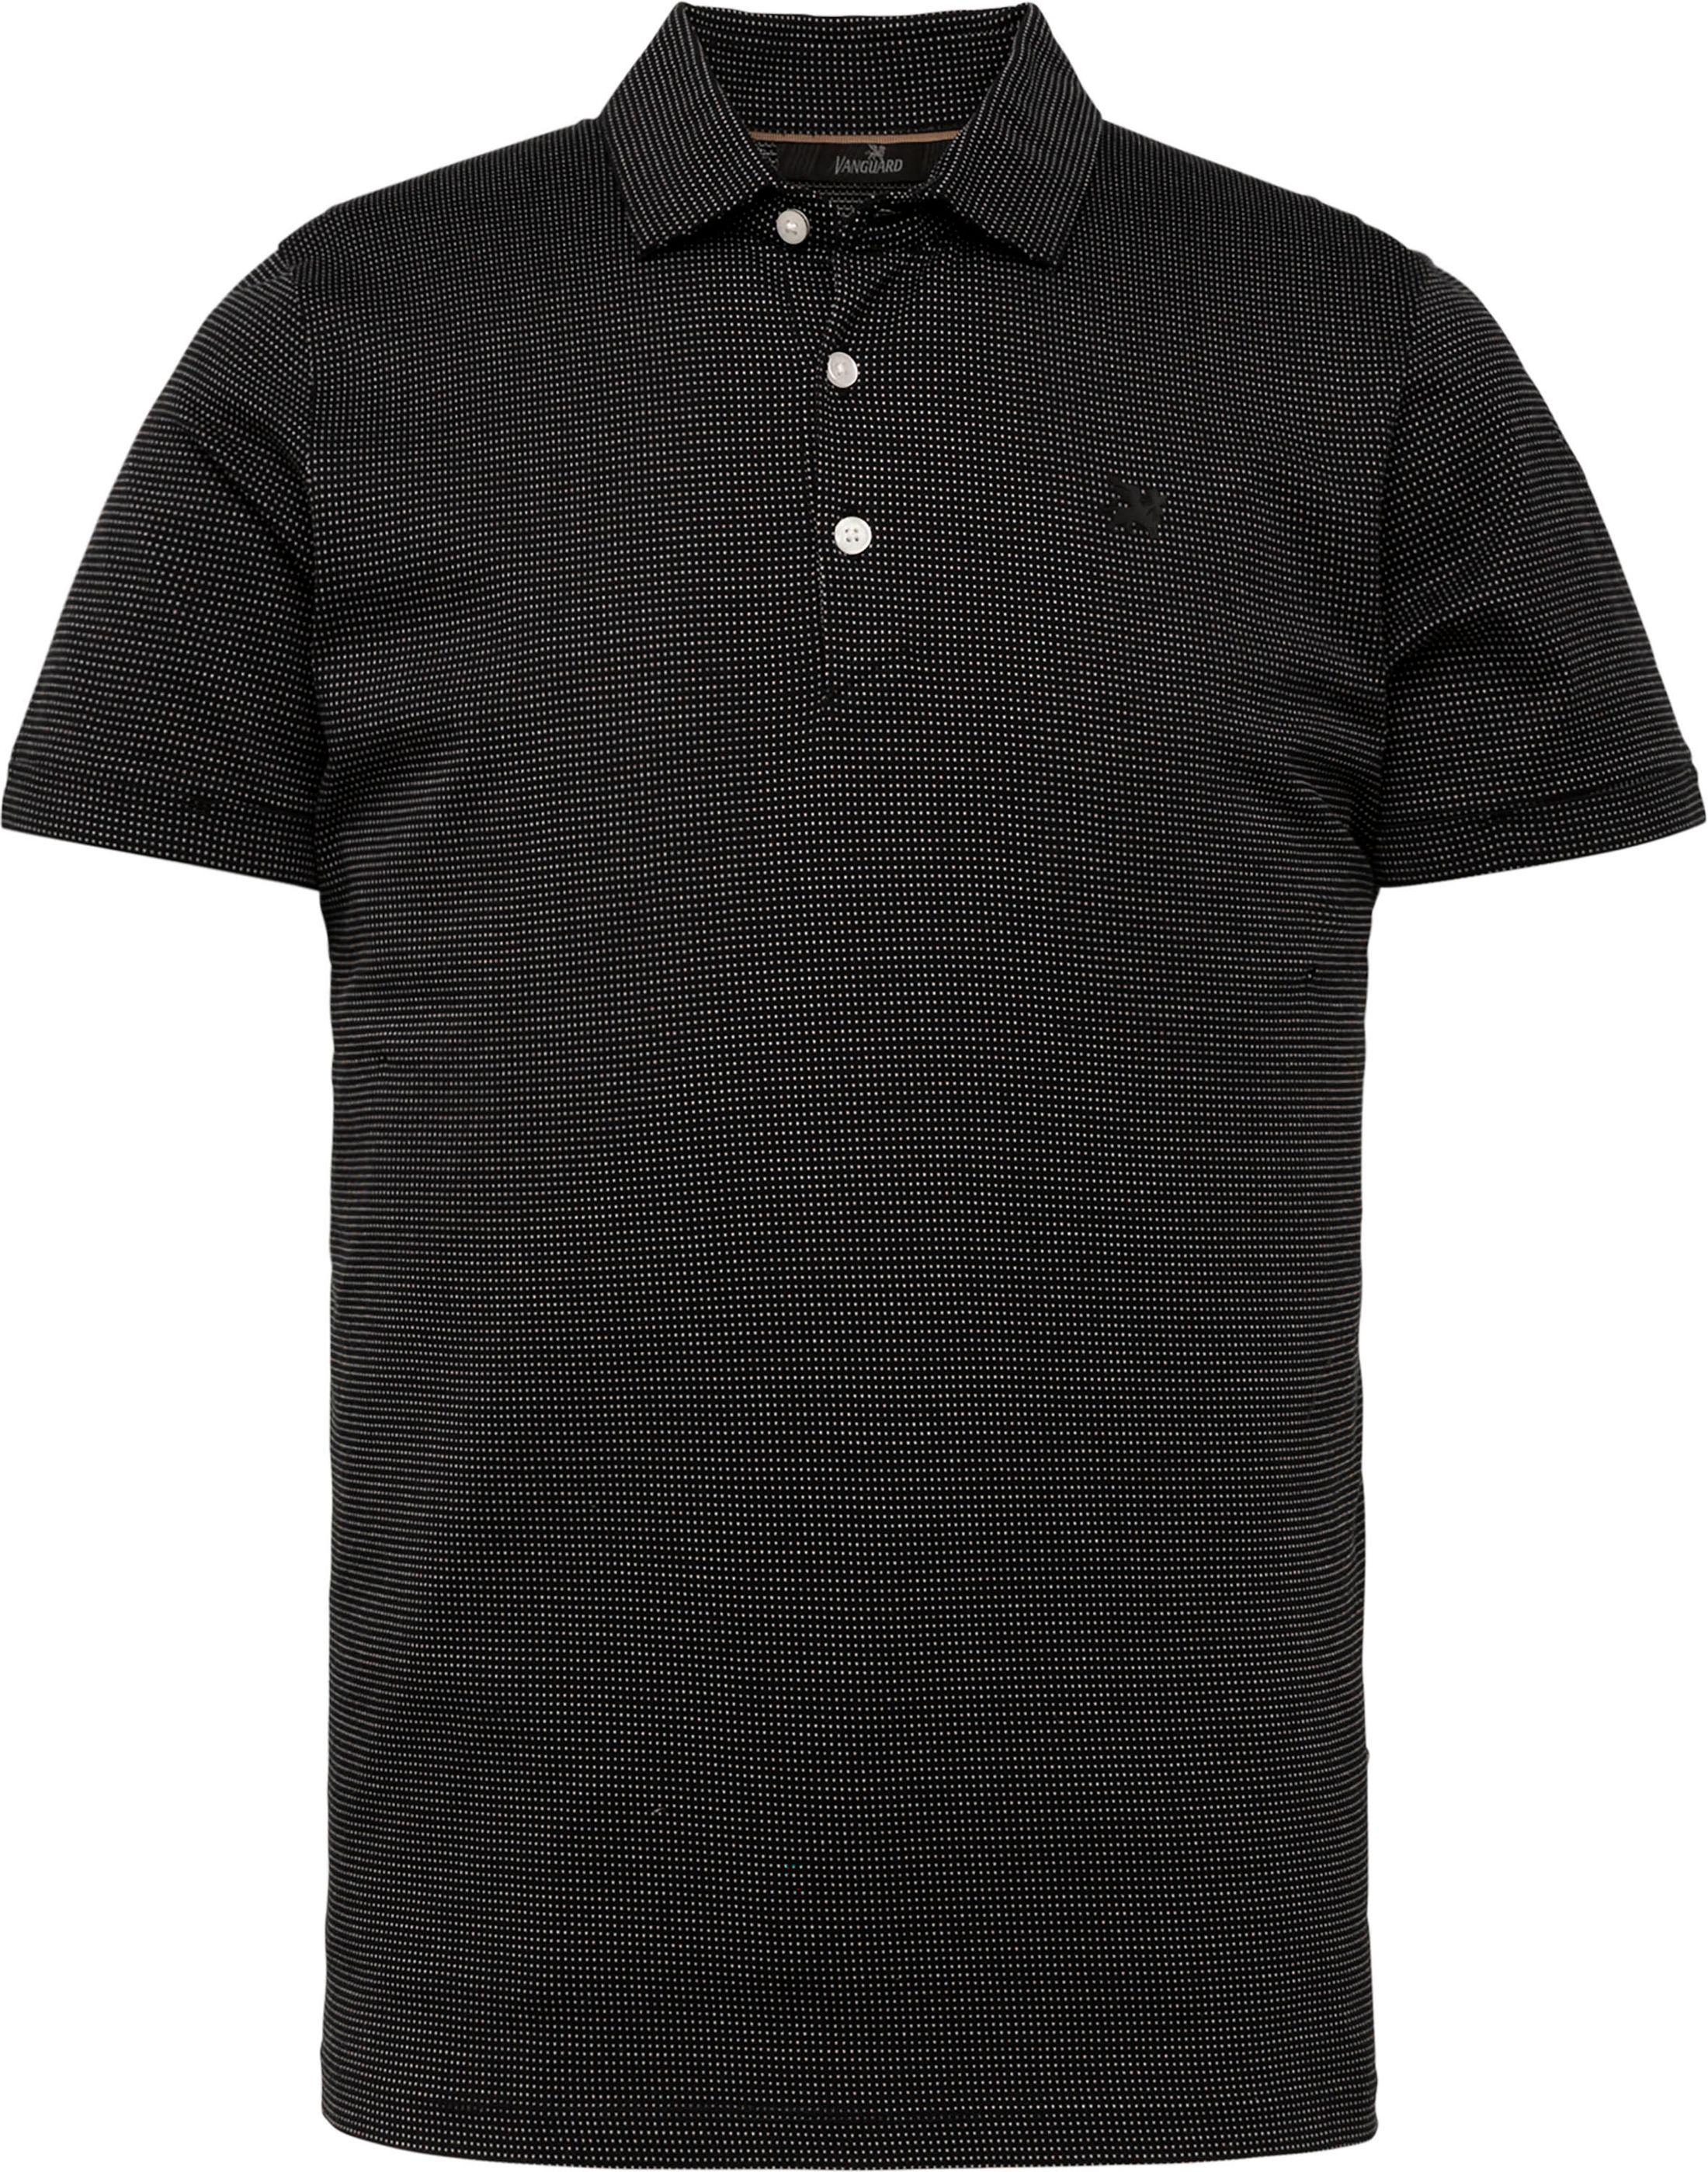 Vanguard Polo Shirt Dots Black size L